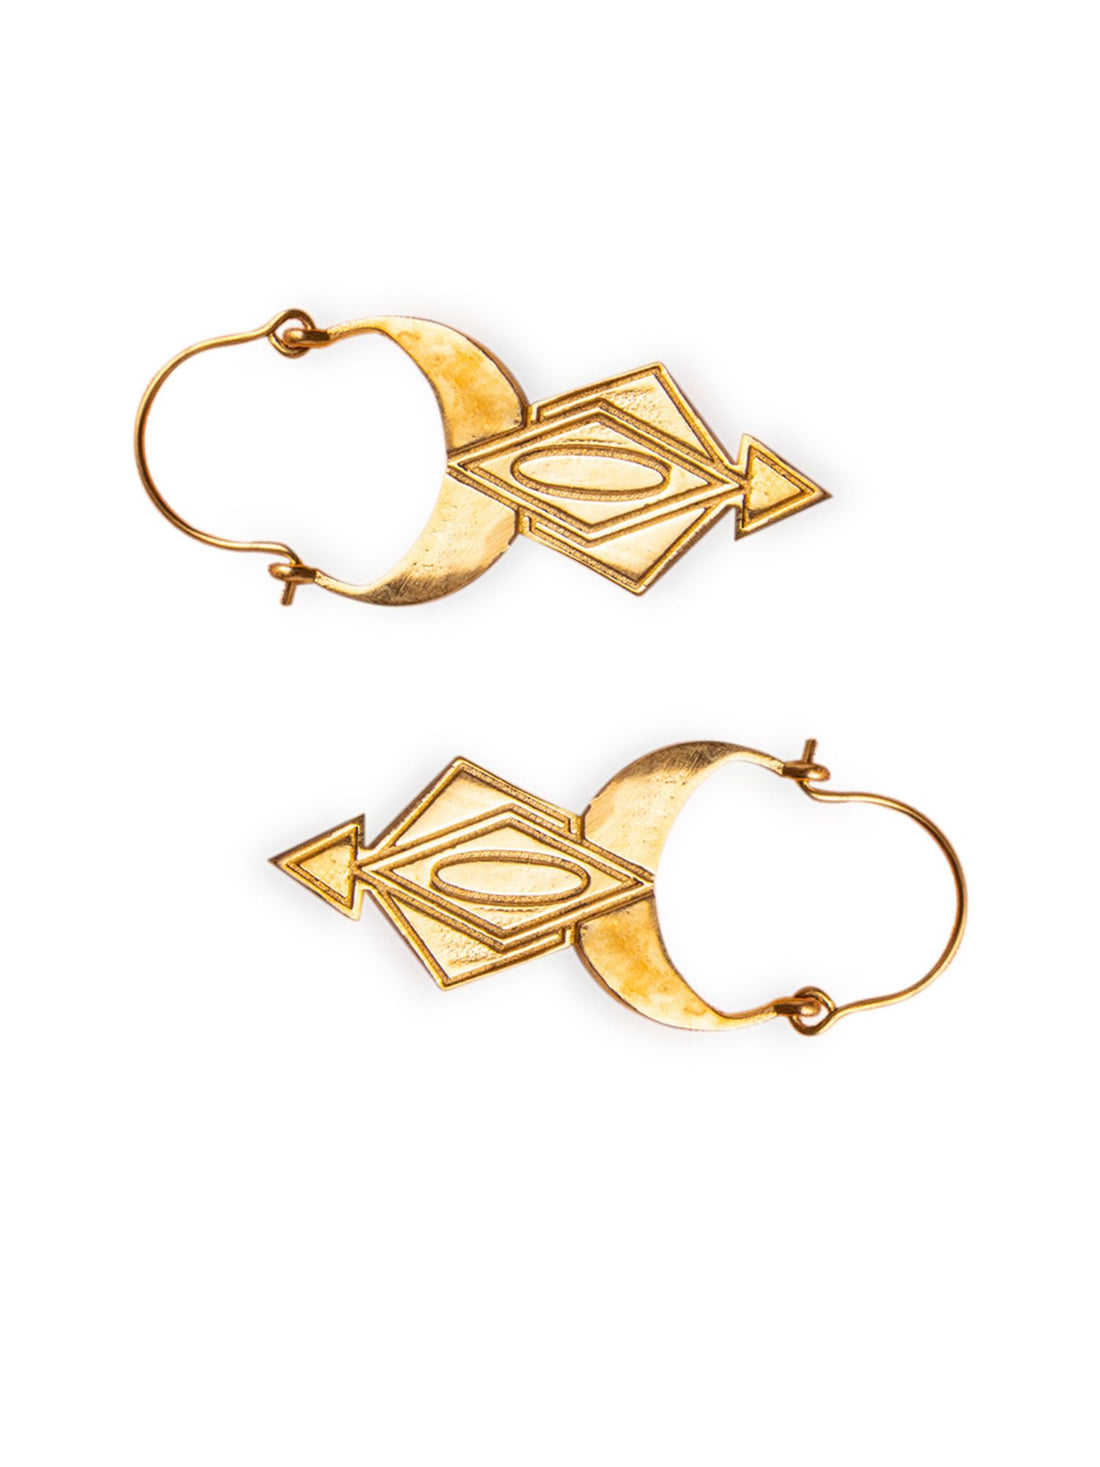 Daily Wear Hoop Earrings - Minimal Gold and Silver-Plated Brass Earrings By Studio One Love